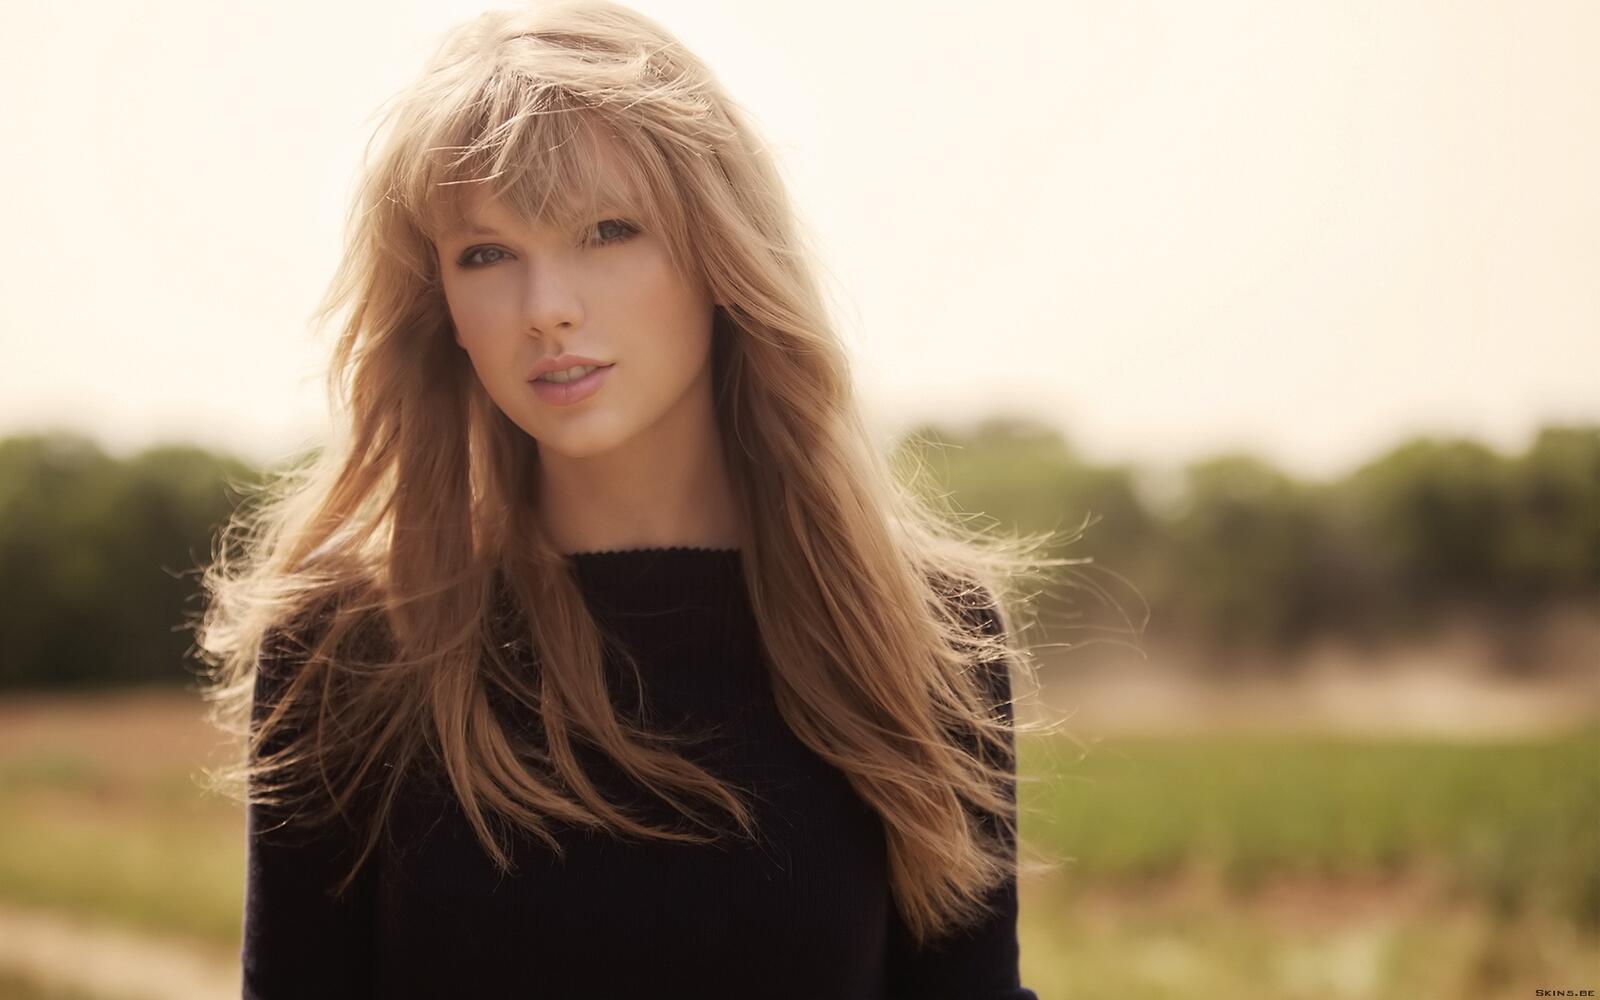 Wallpapers singer Taylor Swift celebrities on the desktop